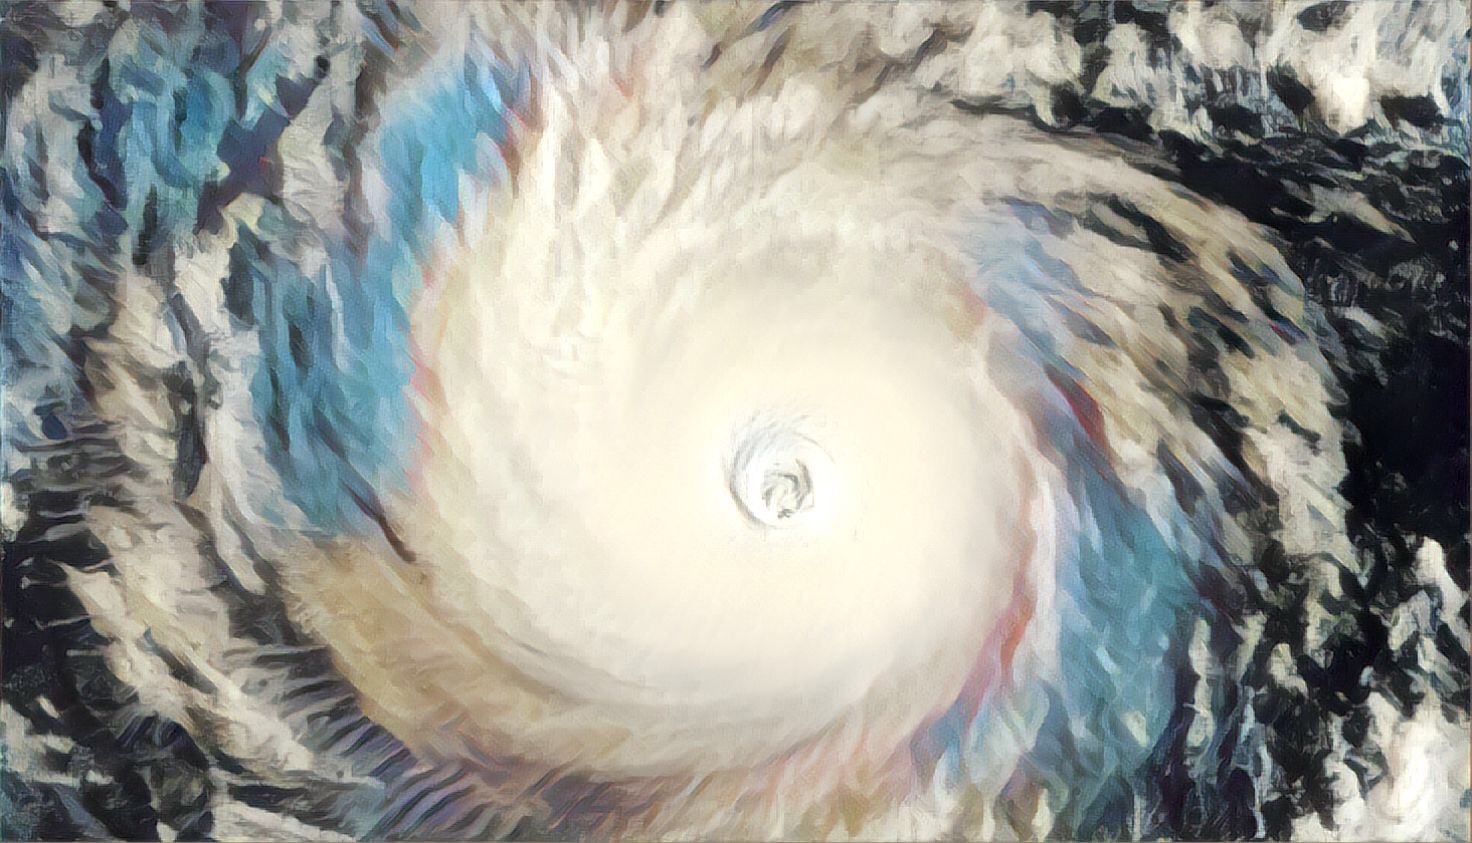 Hurricane Daniel (2006)